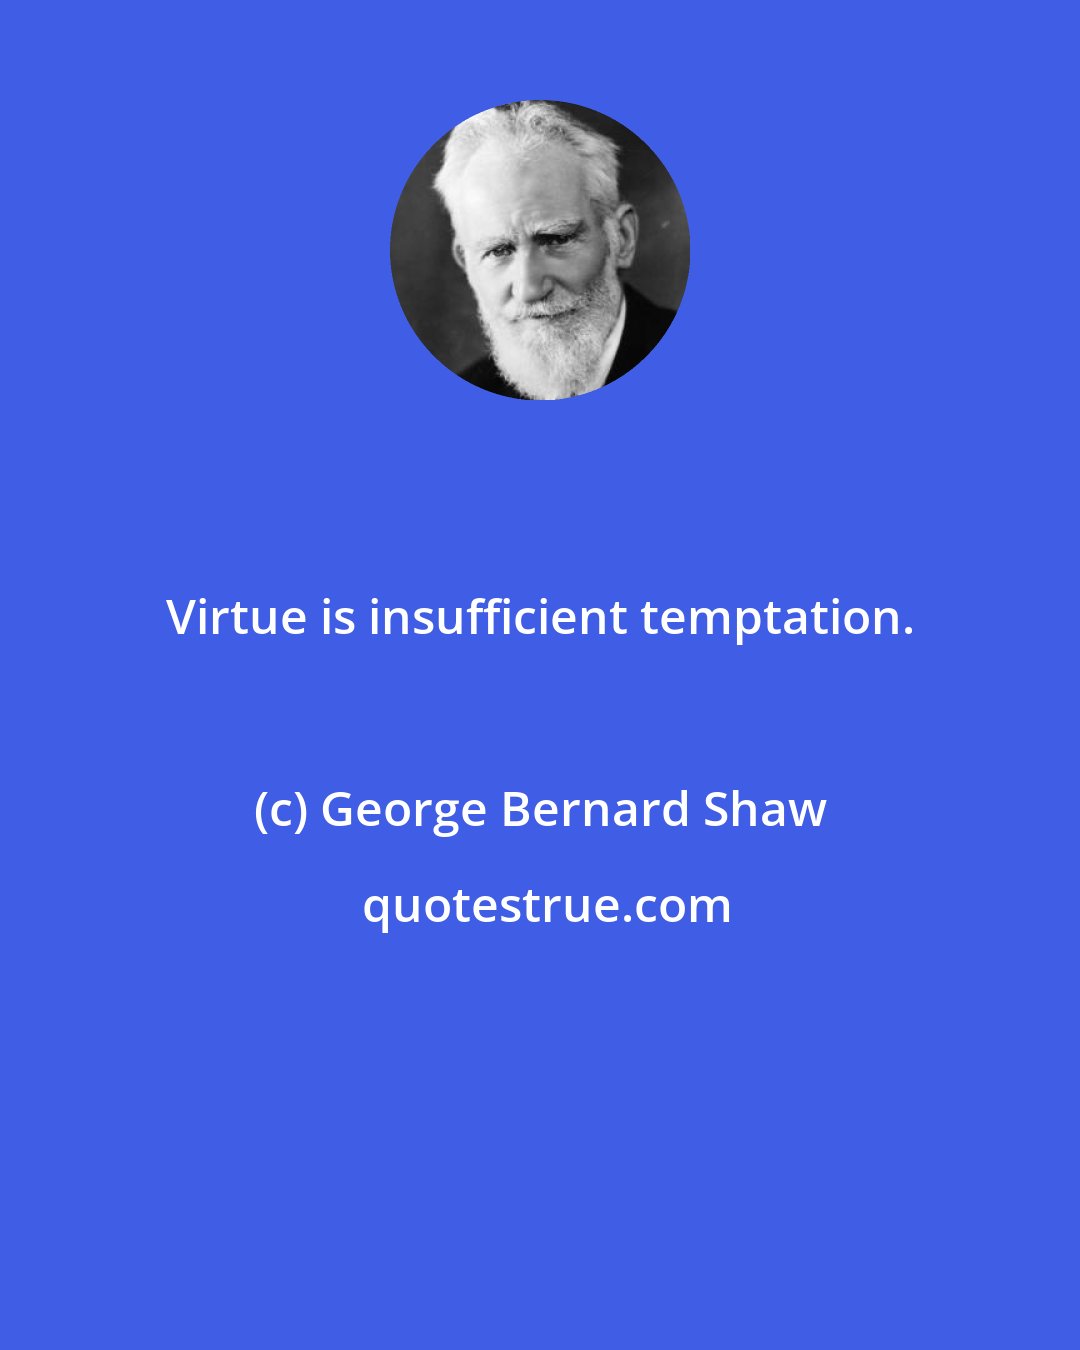 George Bernard Shaw: Virtue is insufficient temptation.